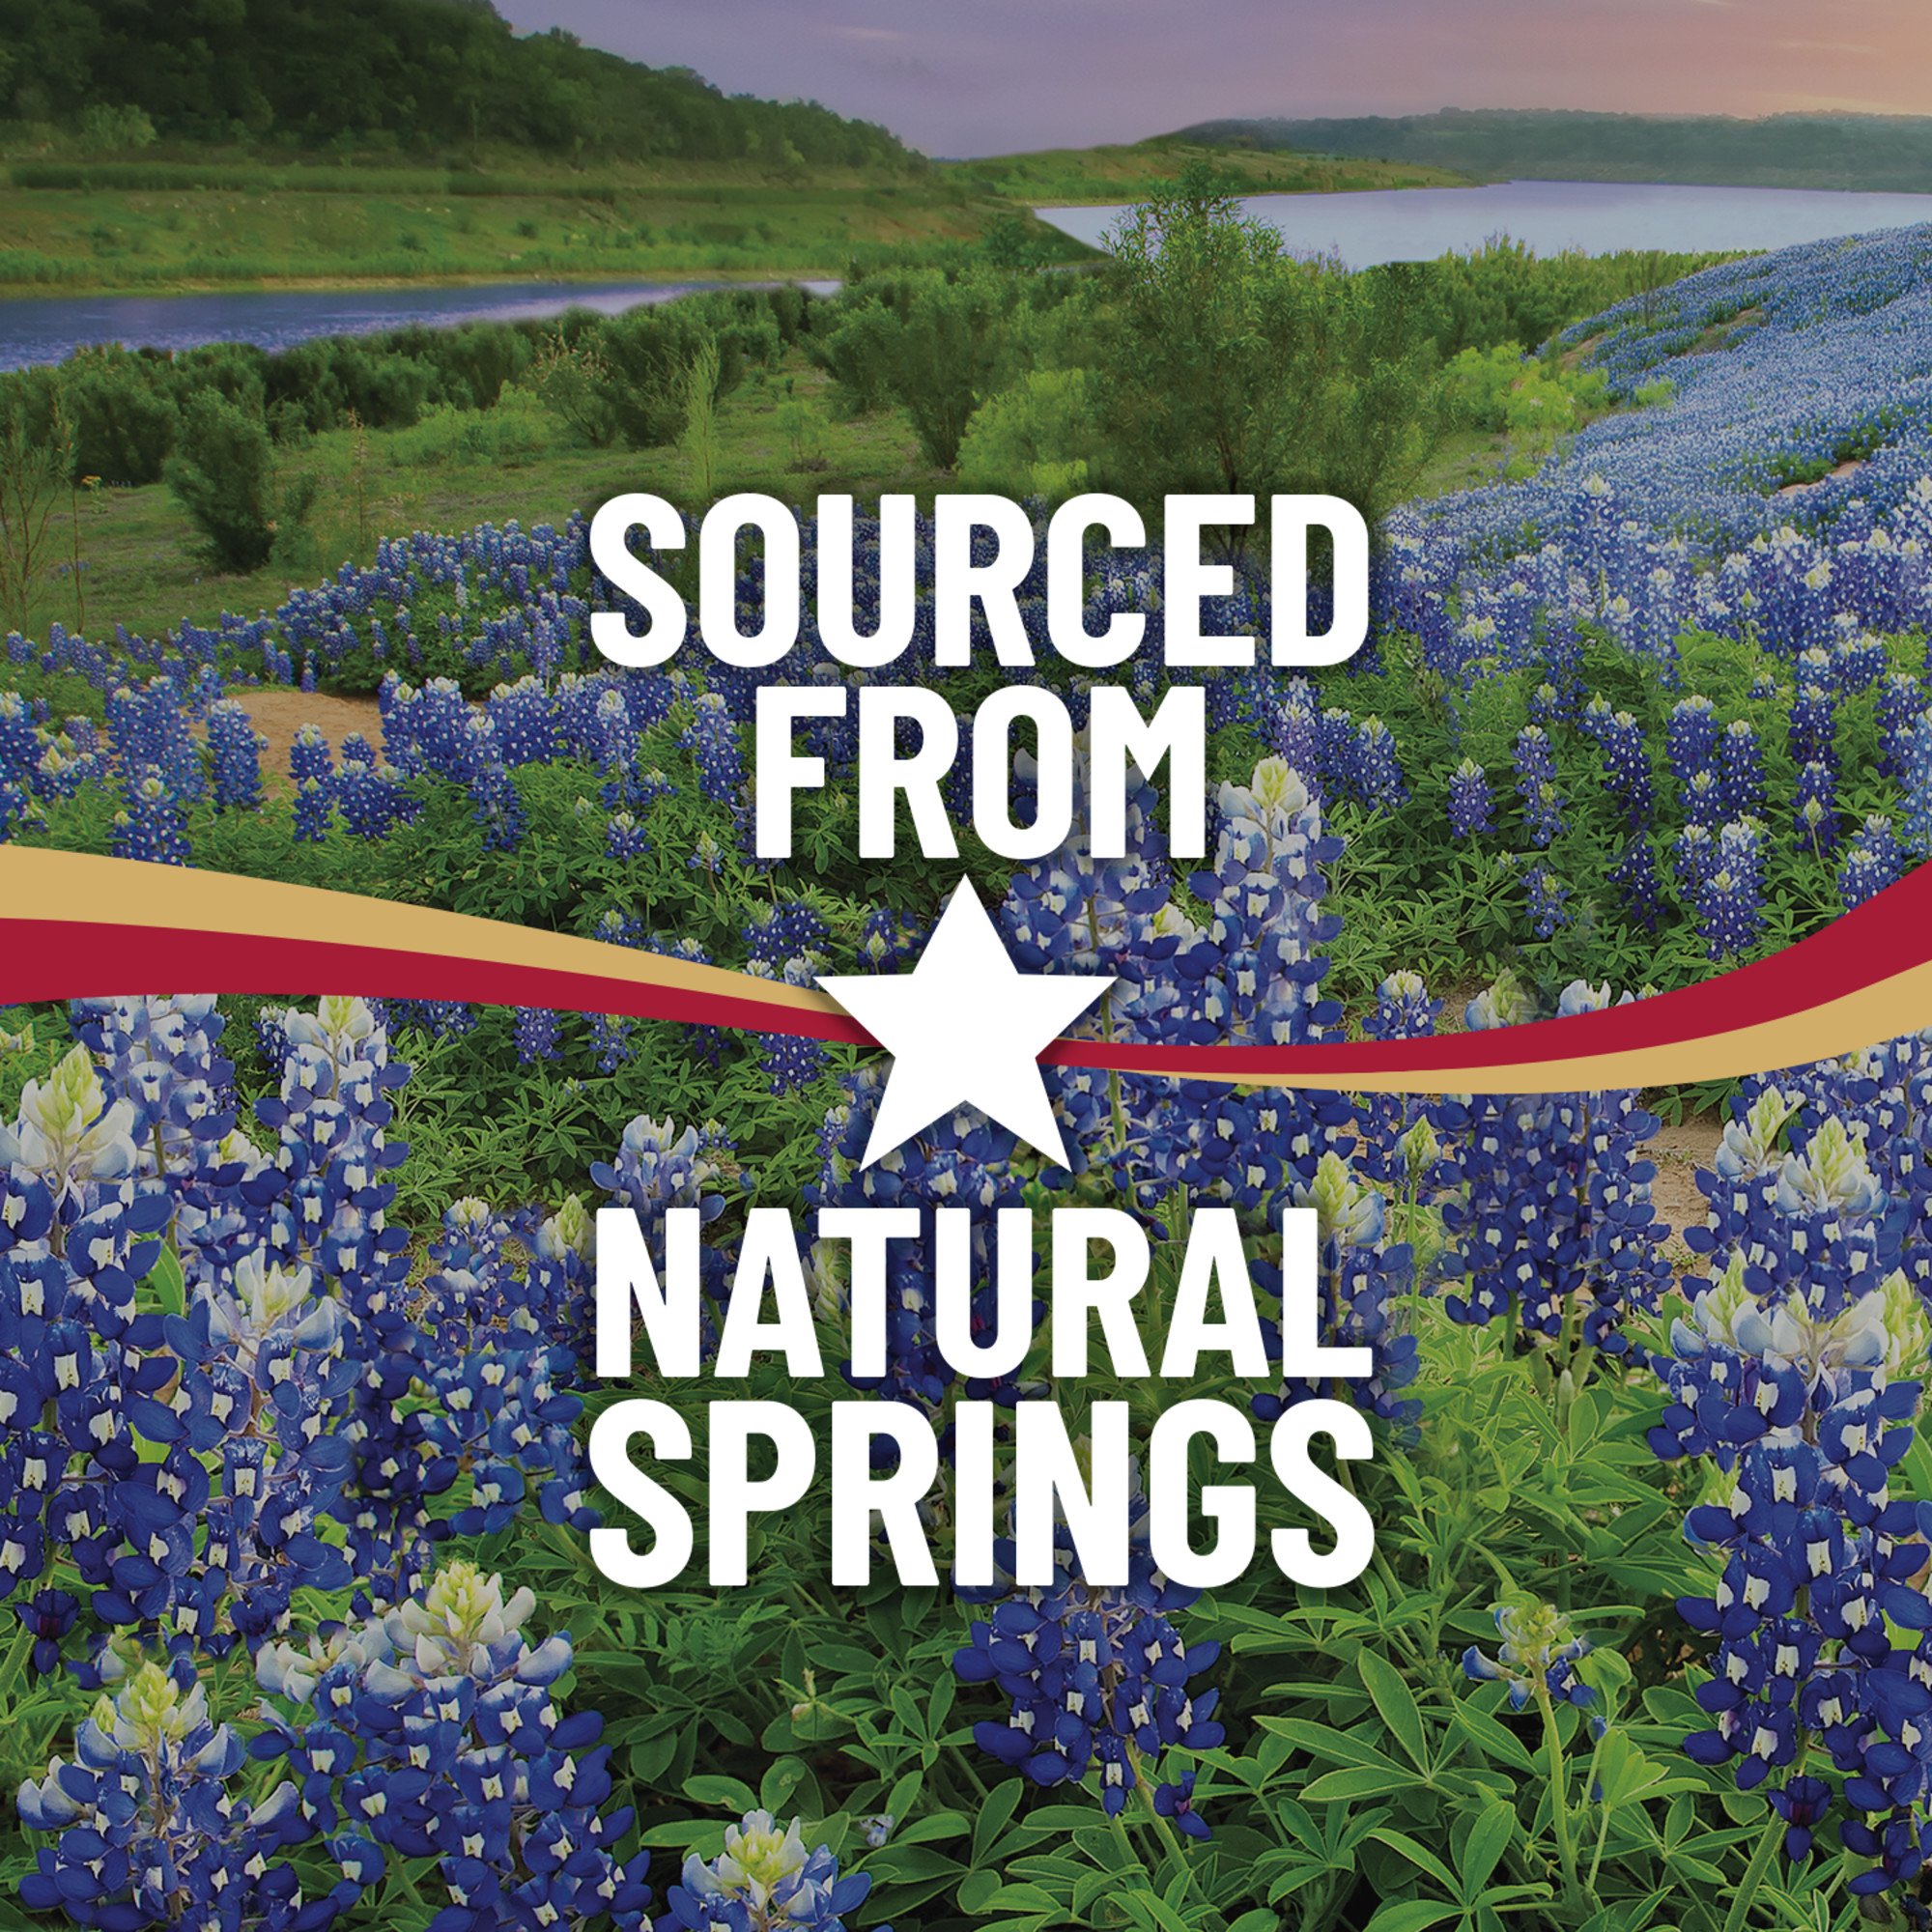 Ozarka 100% Natural Spring Water 23.7 oz Bottles - Shop Water at H-E-B